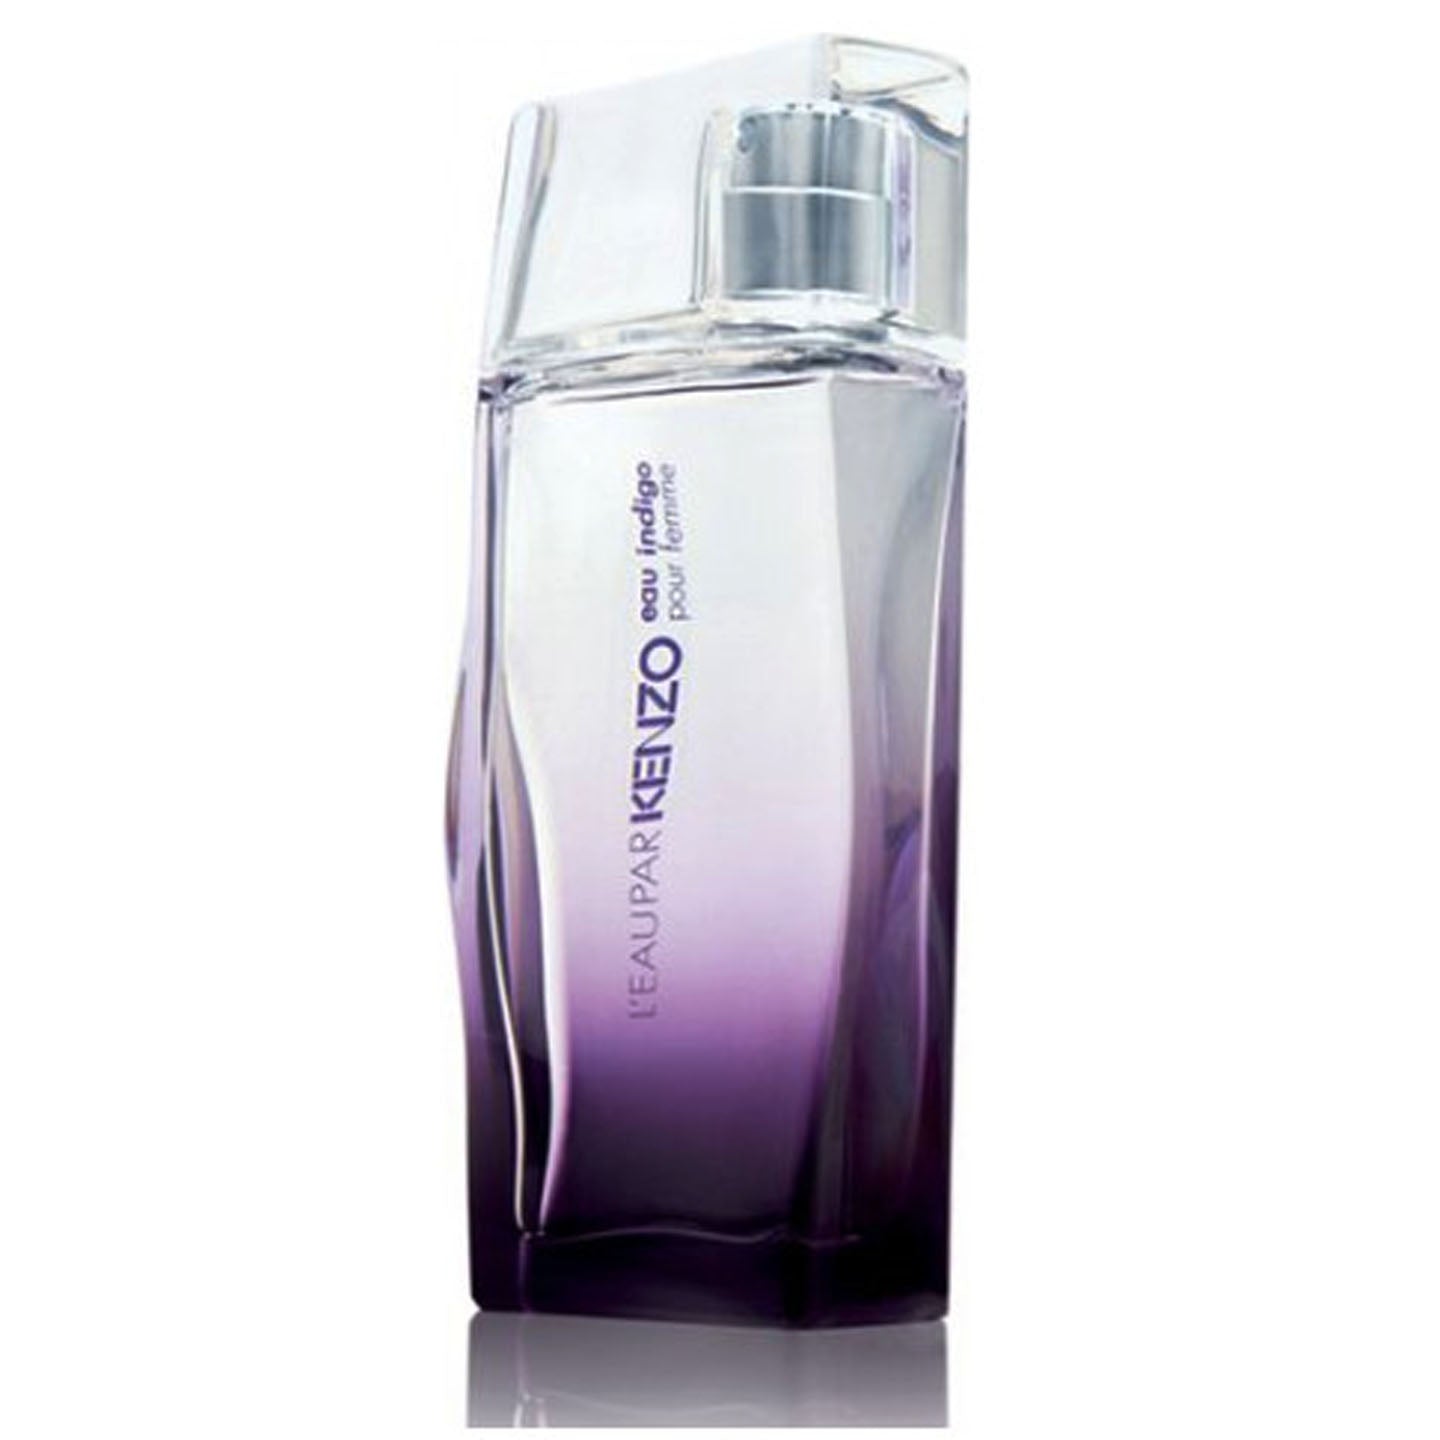 Kenzo L'eau Par Indigo Eau de Parfum Spray 100 ml for Women